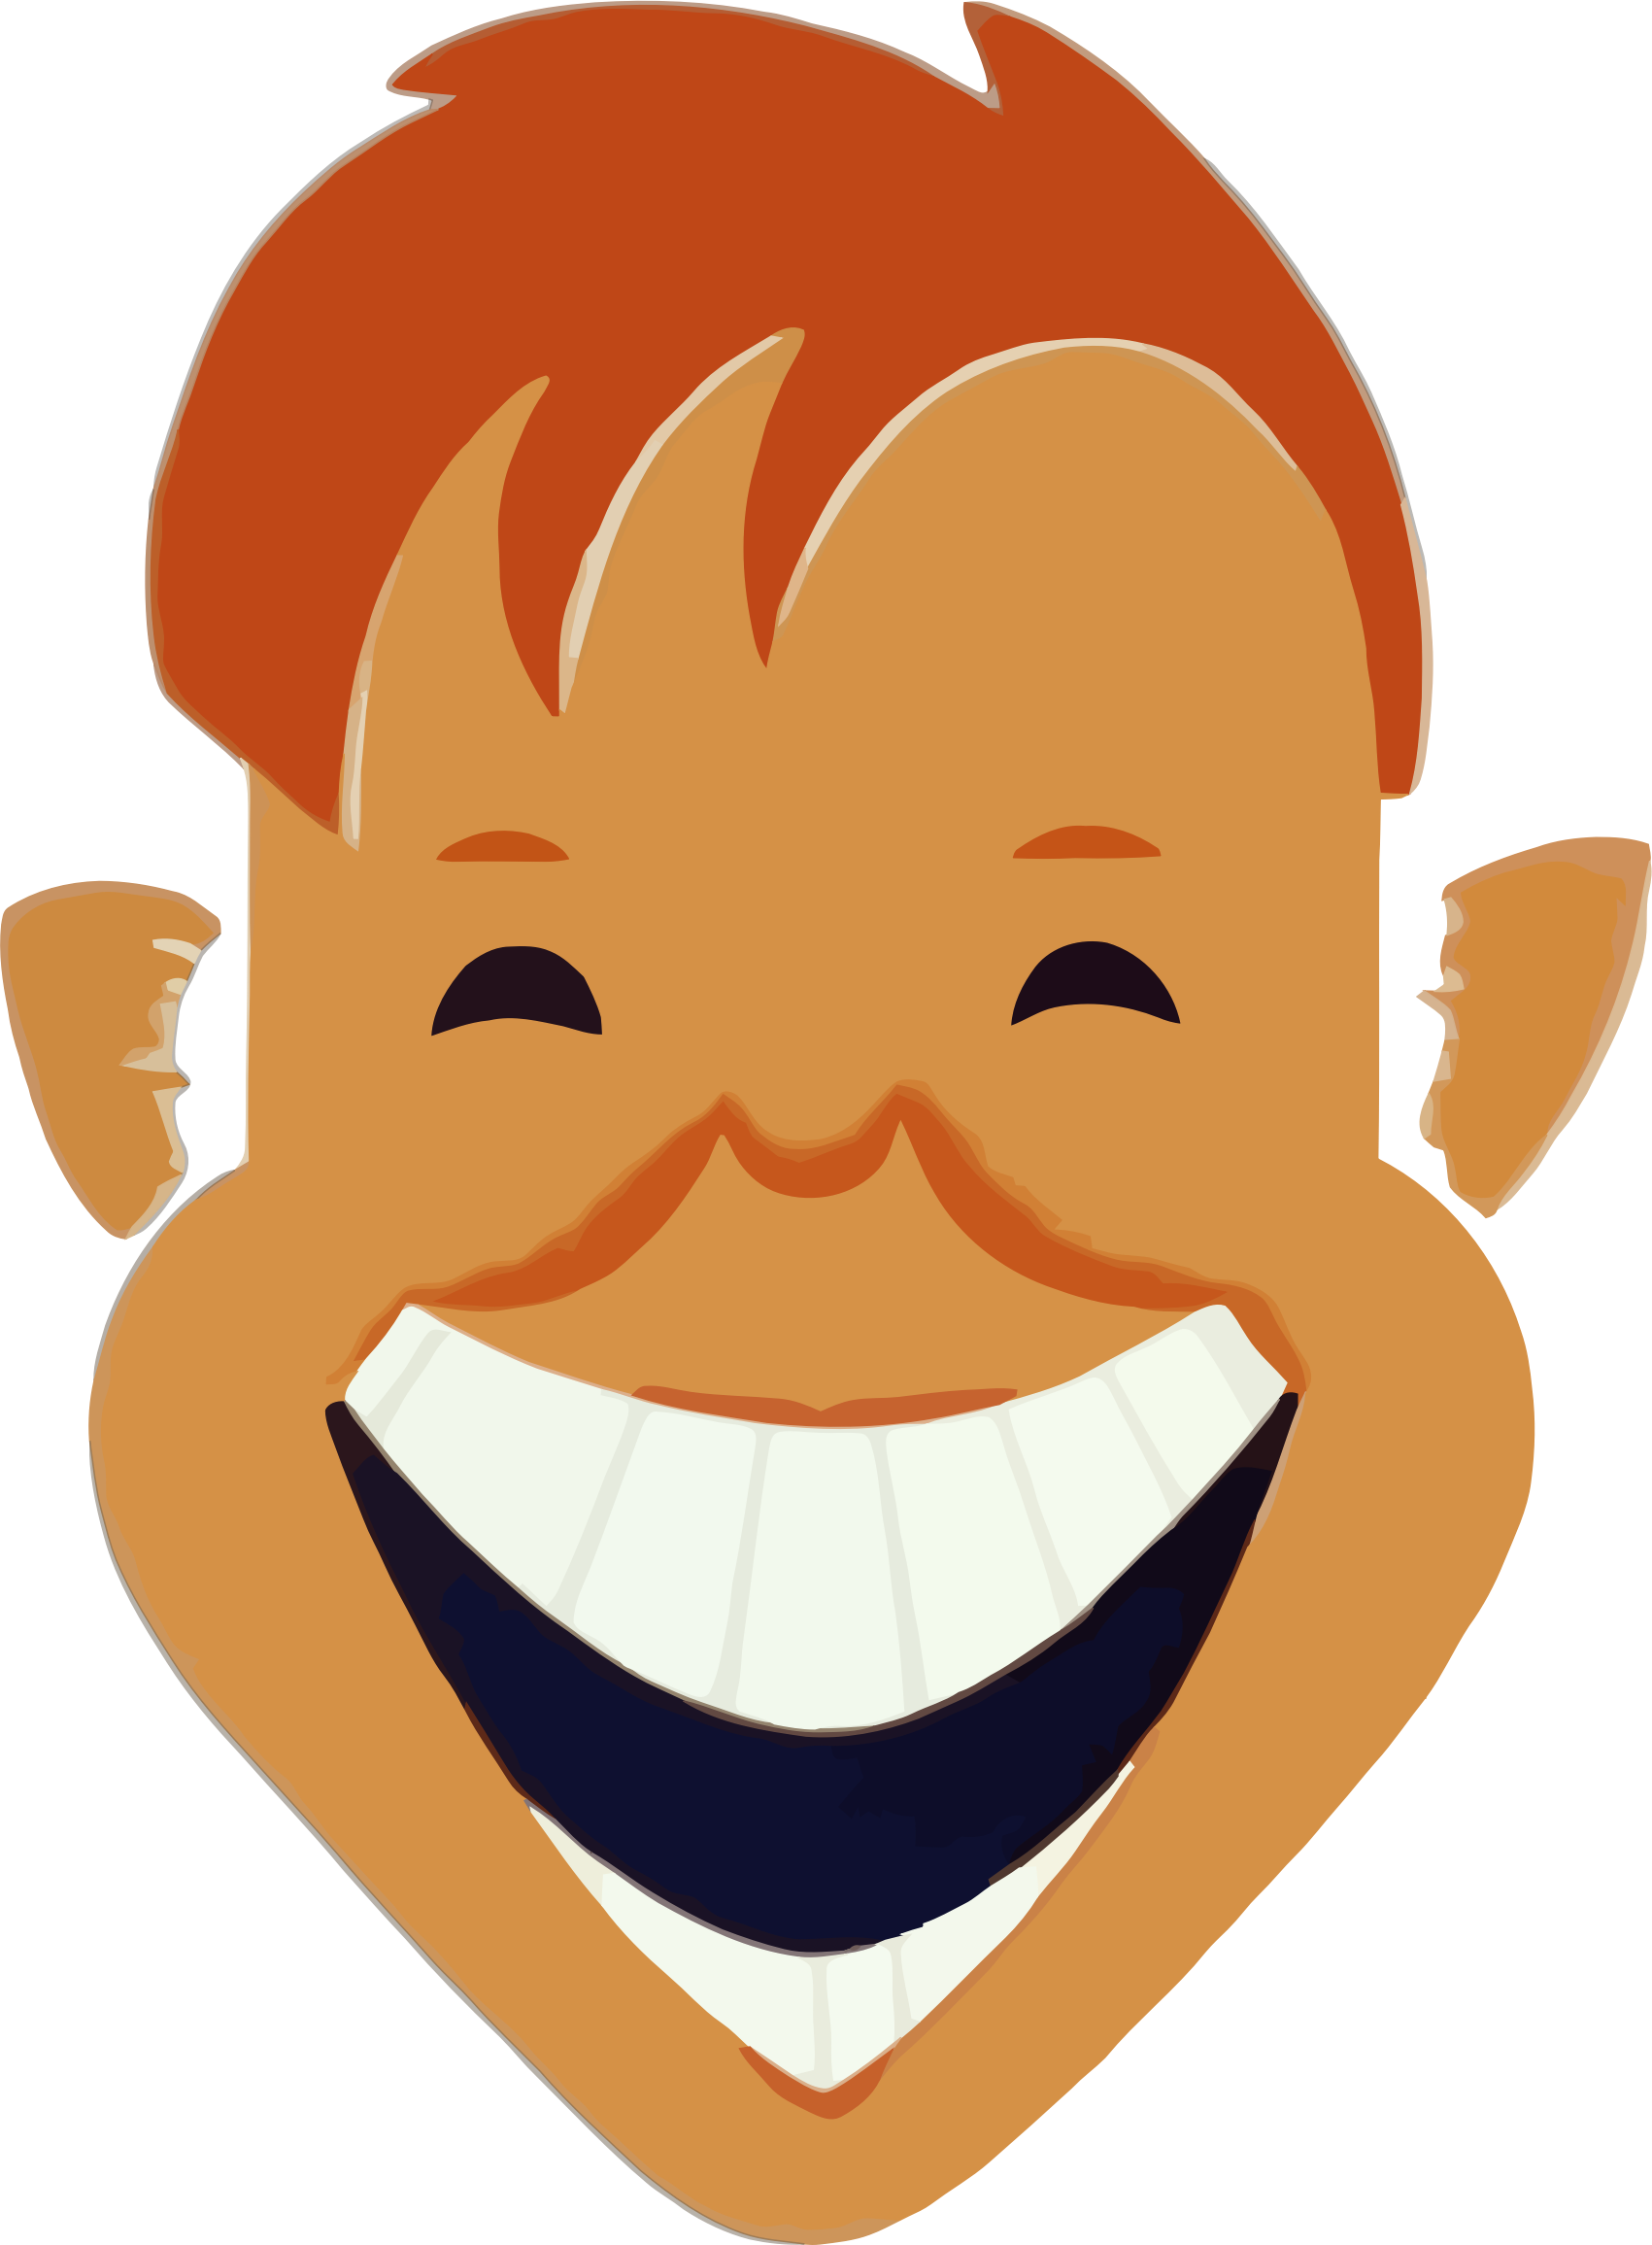 A Cartoon Of A Smiling Boy